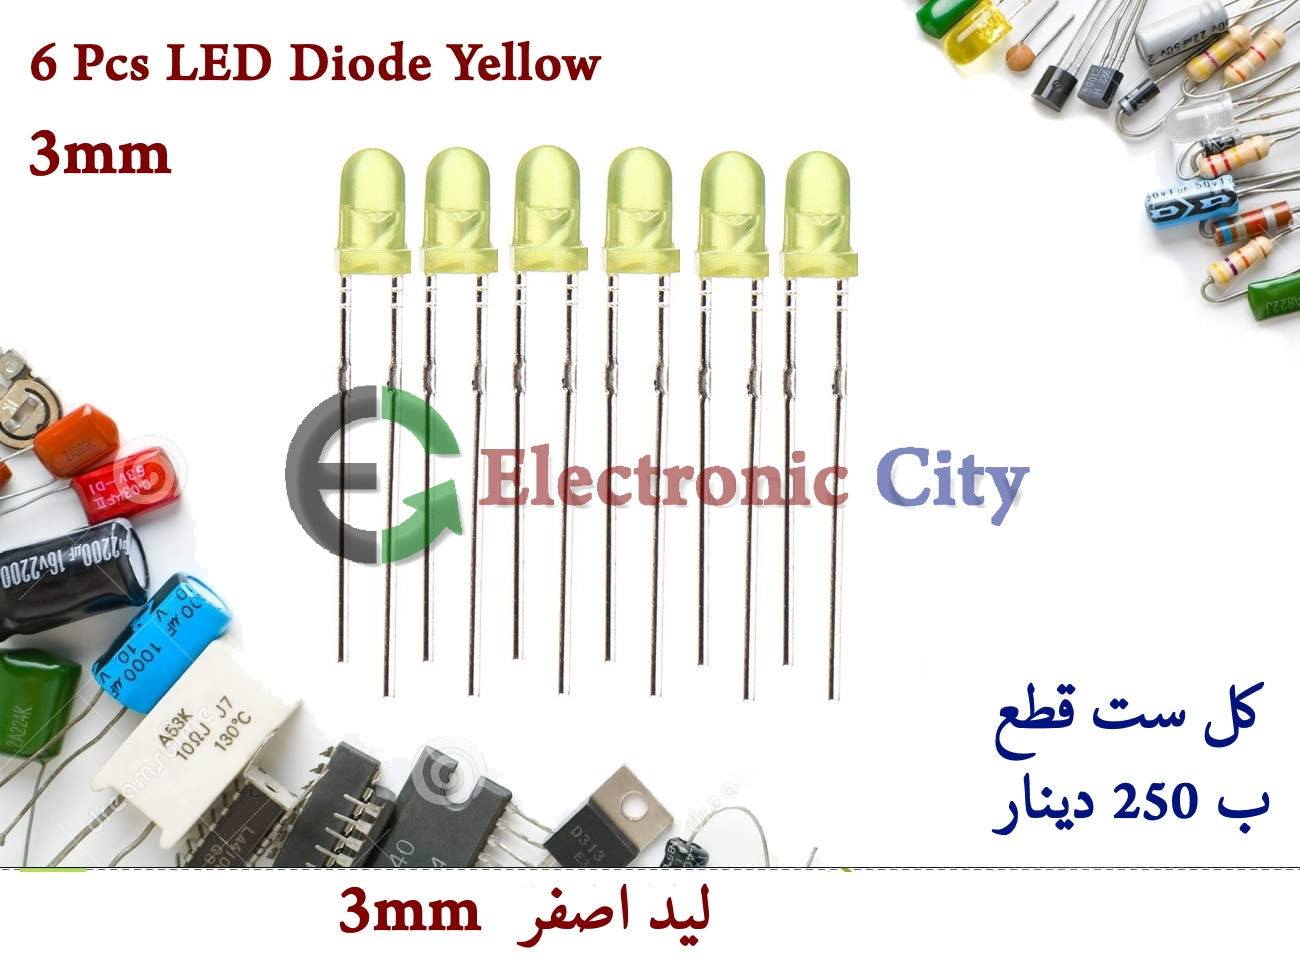 6 Pcs LED Diode Yellow 3mm